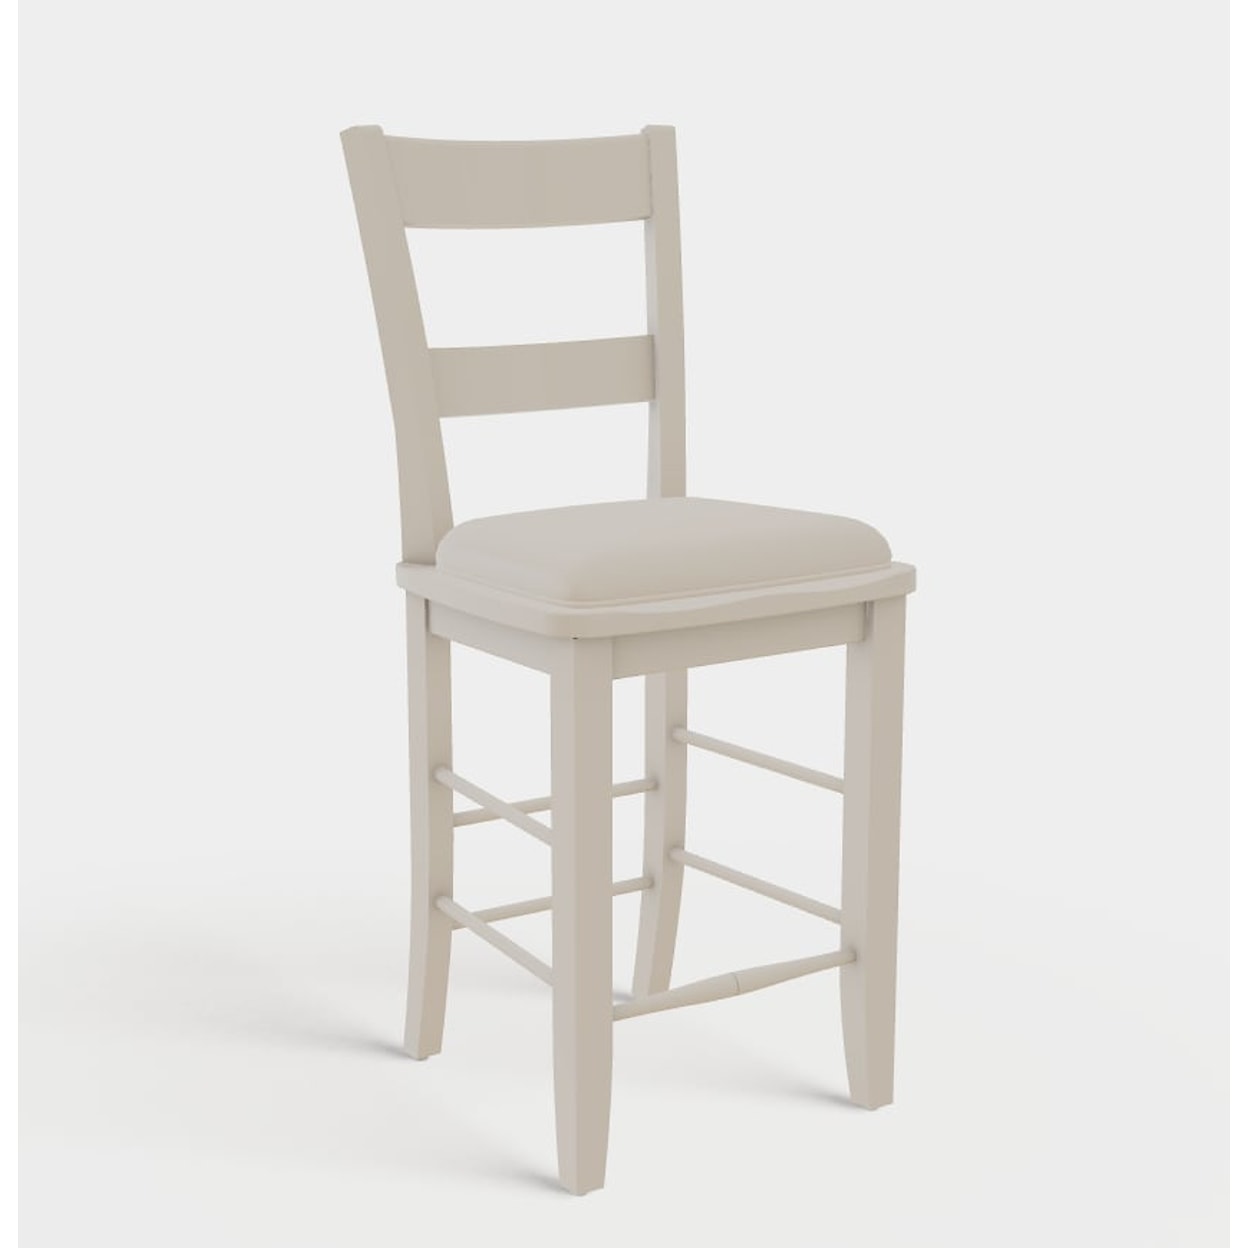 Mavin Aspen Aspen Customizable Chair